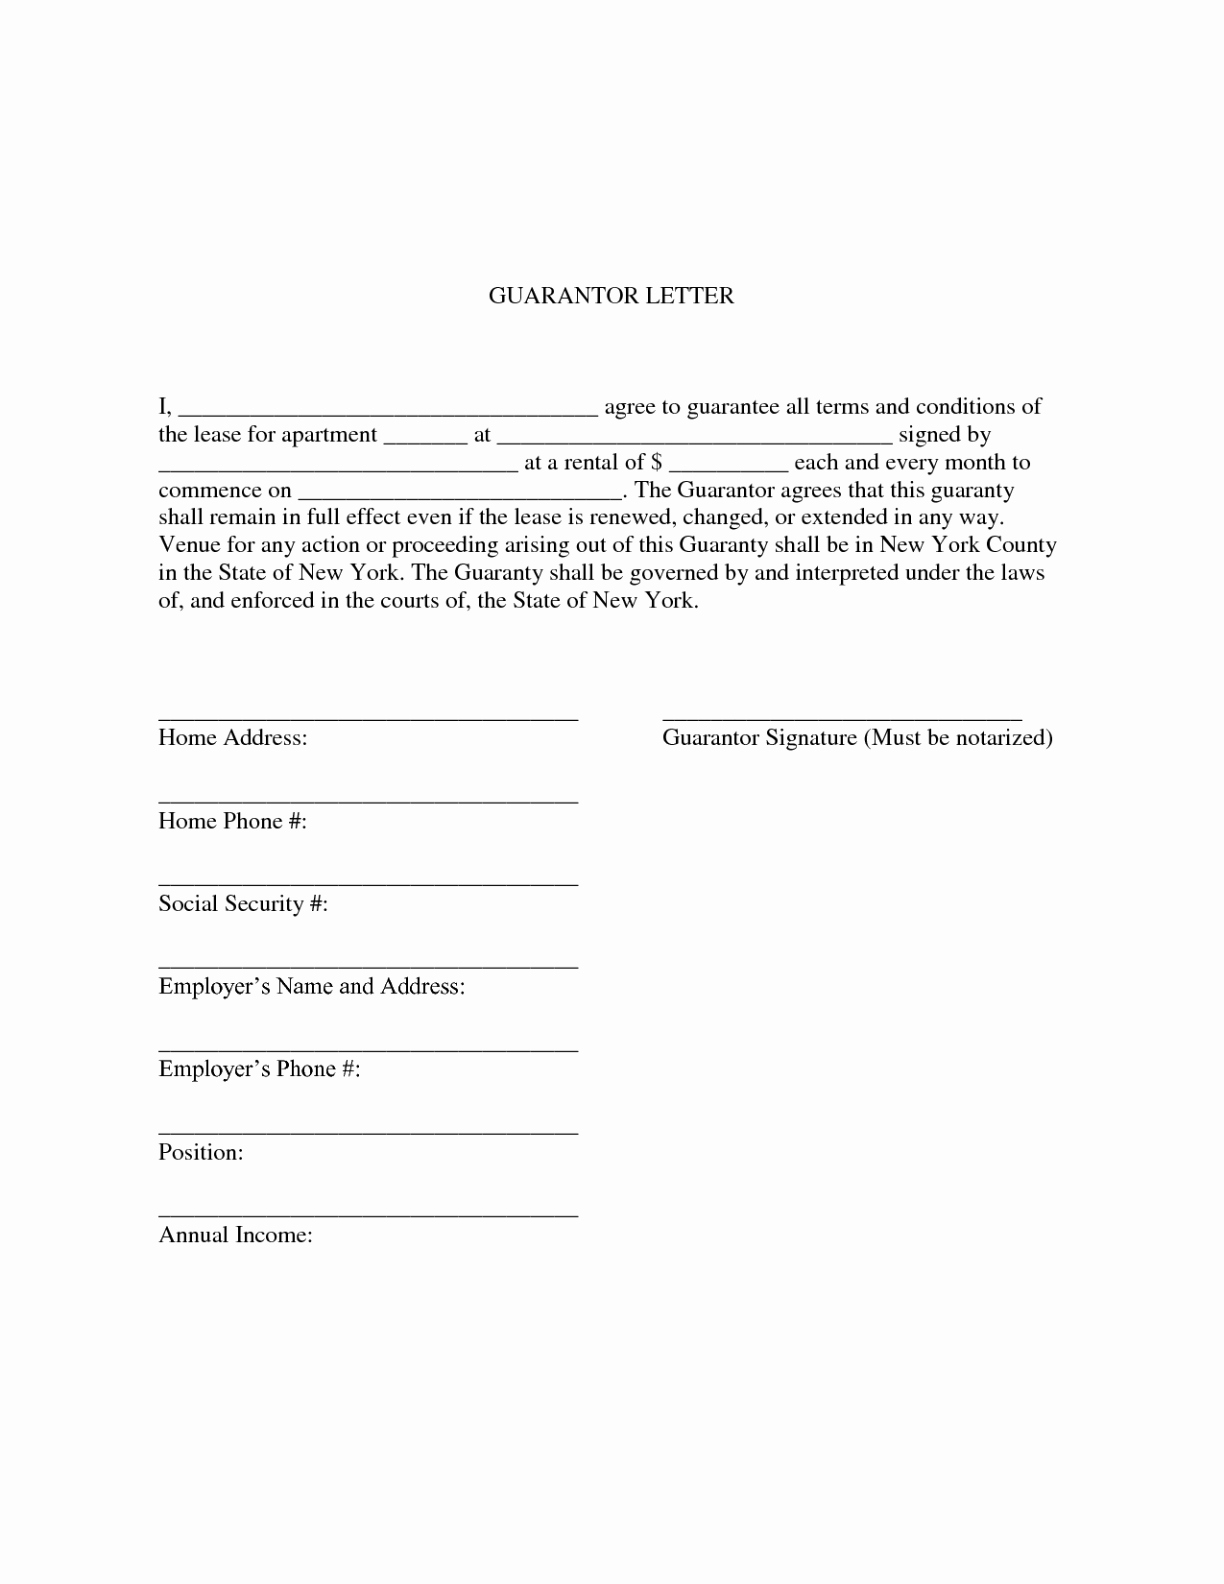 Tenant Guarantor Letter Template - Rental Agreement Verification Letter Luxury Guarantor Agreement form